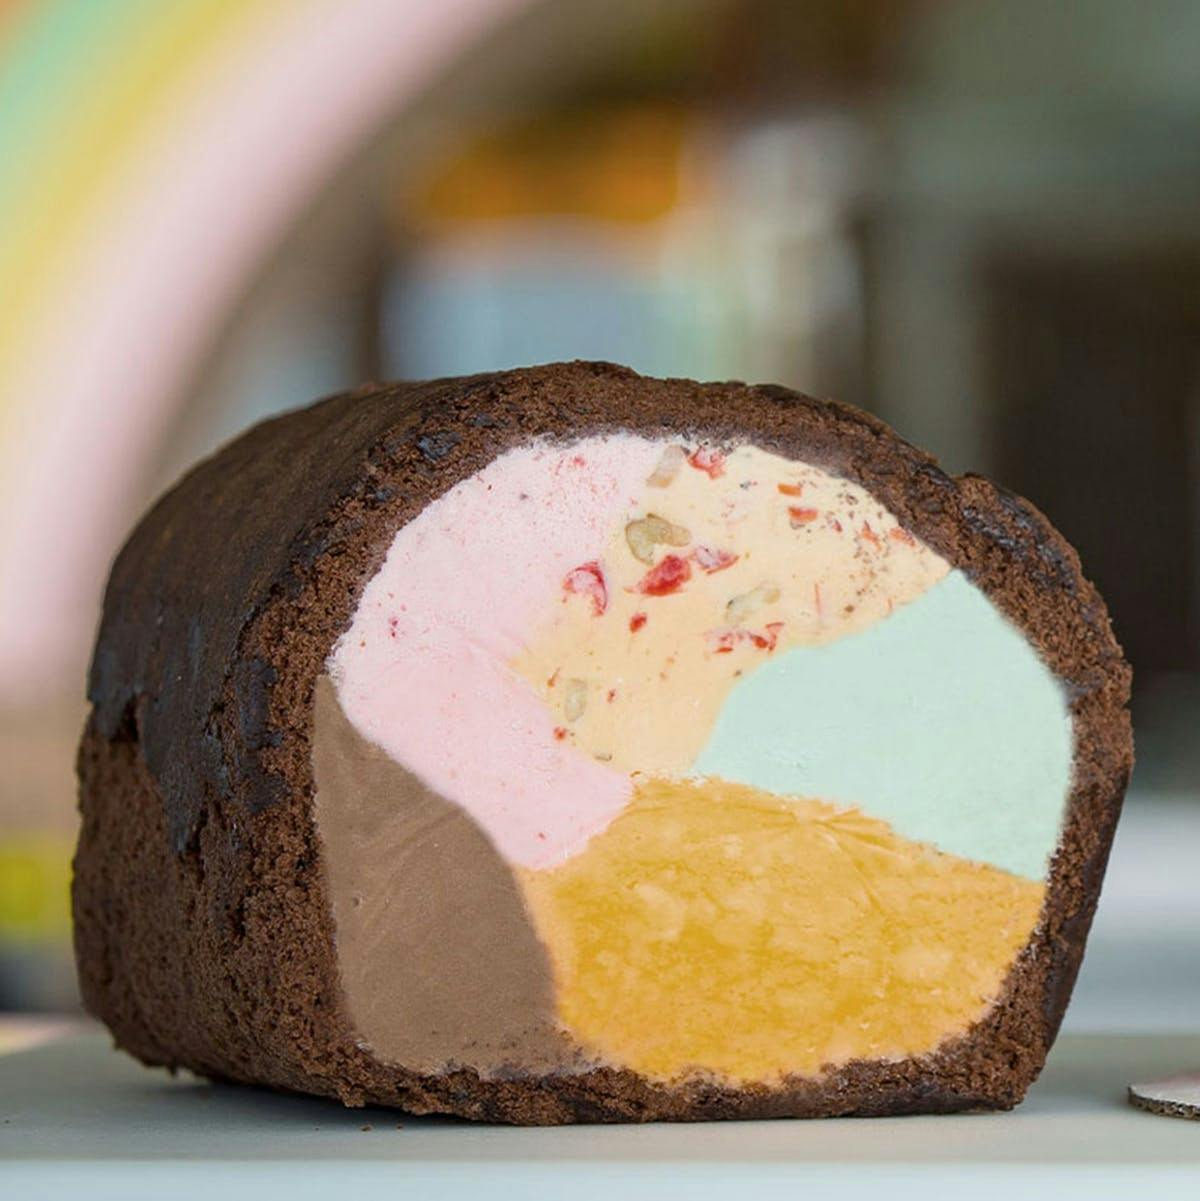 Neapolitan Ice Cream Cake Roll Recipe by Tasty